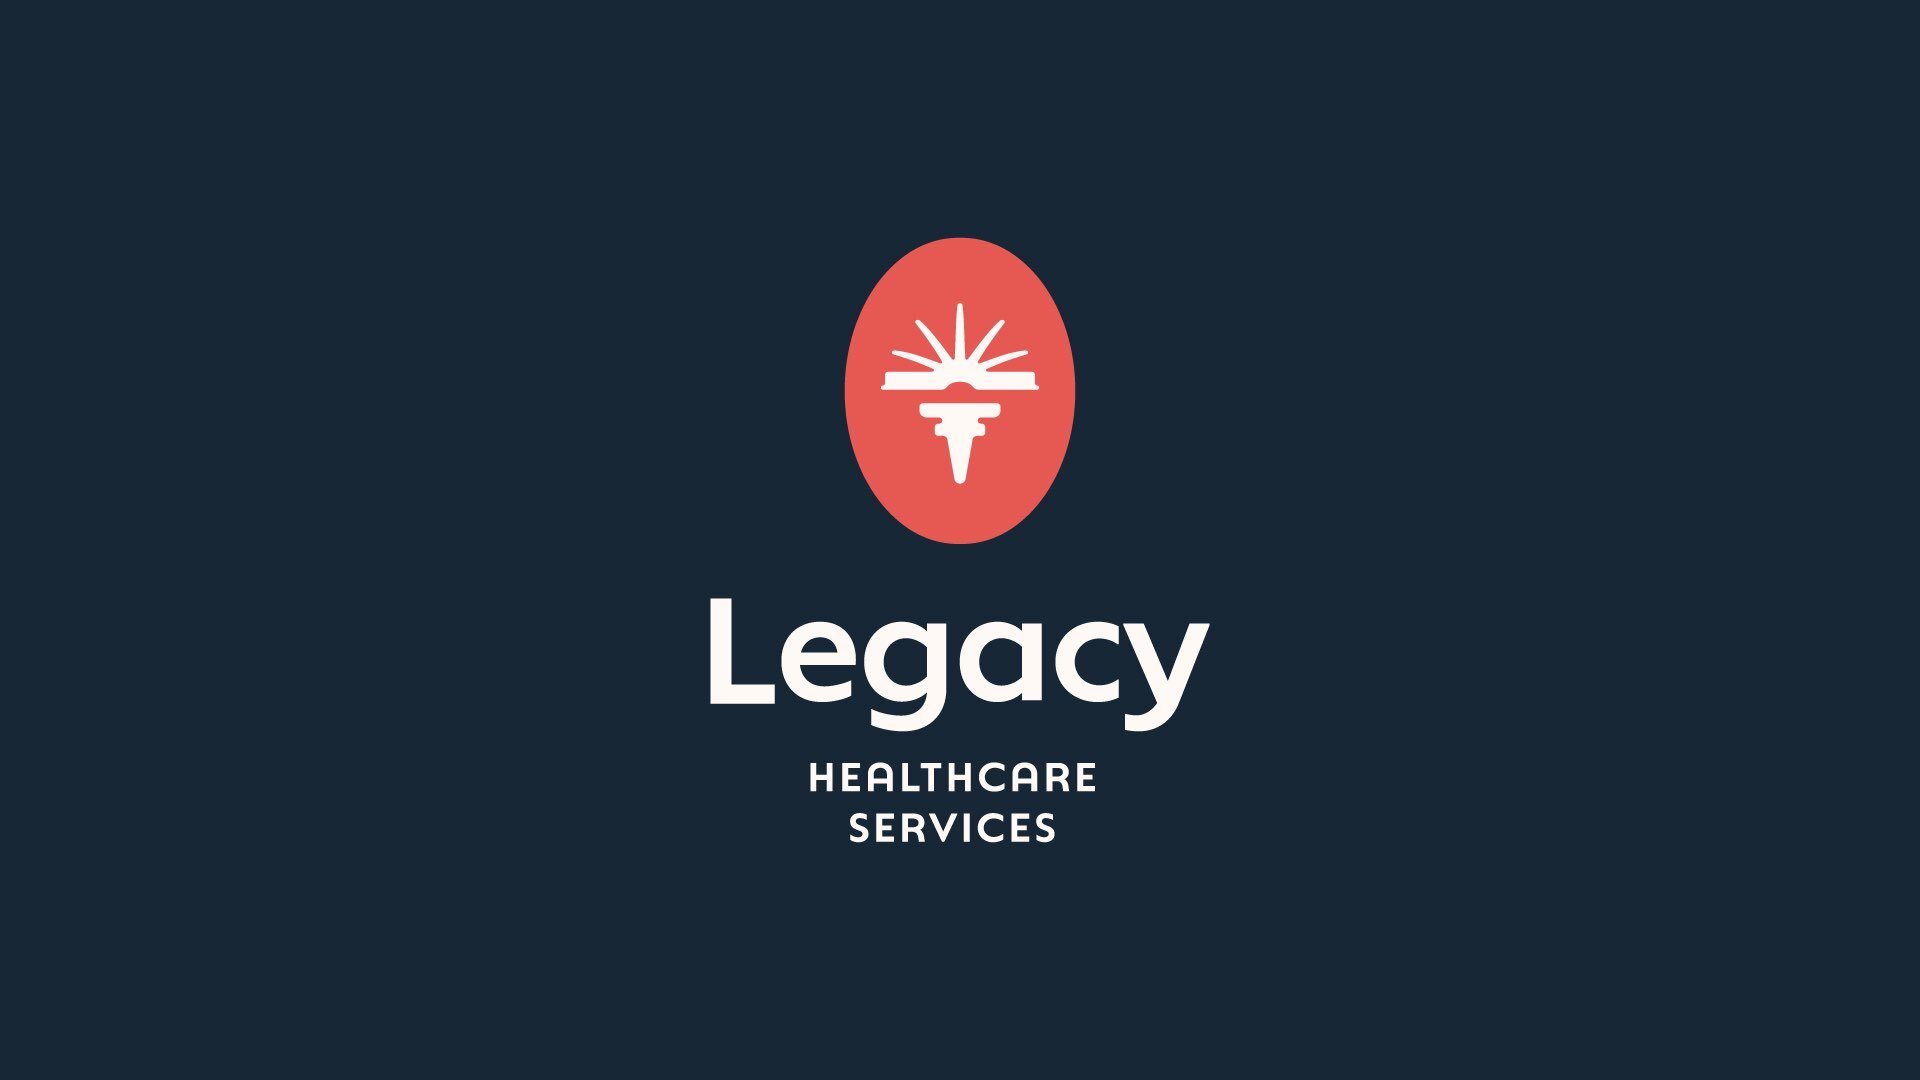 Legacy Healthcare Services rebrand logo design